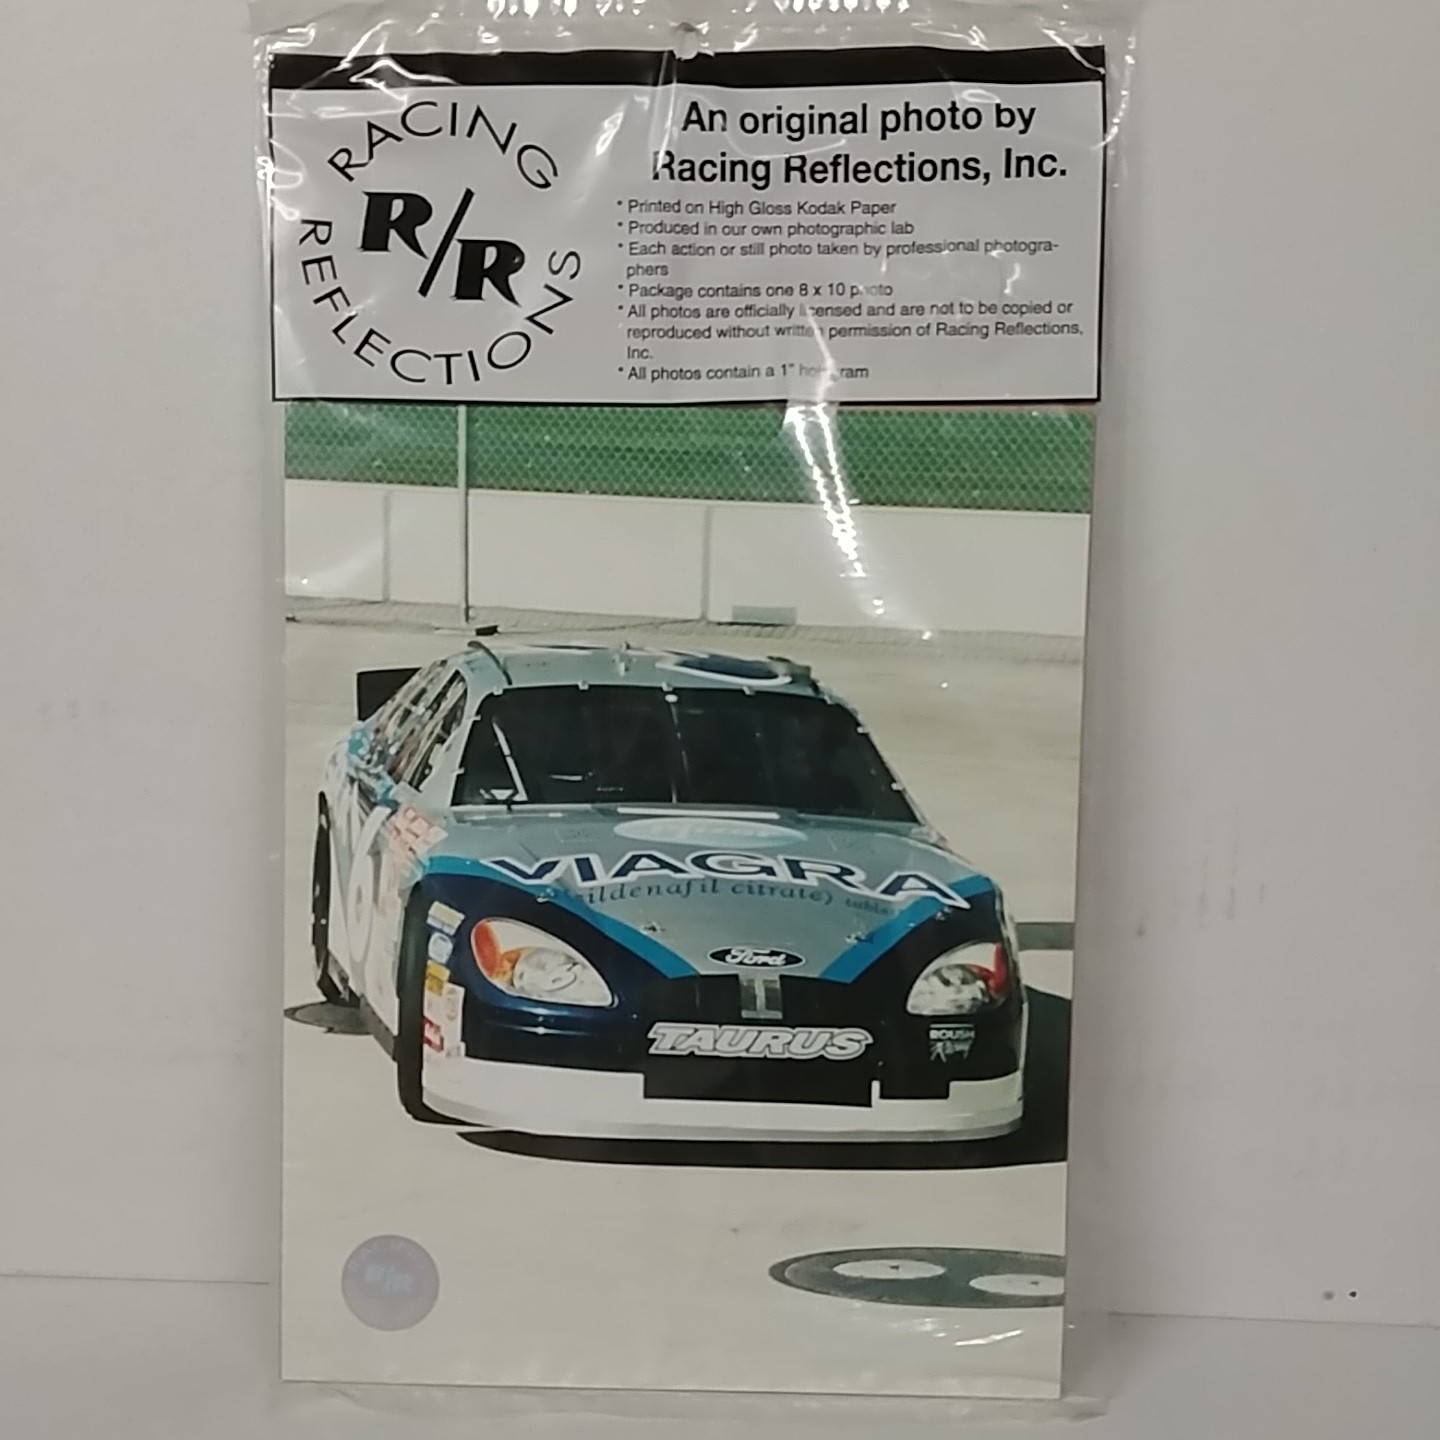 2001 Mark Martin Viagra "Car On Track" Racing Reflections Photo